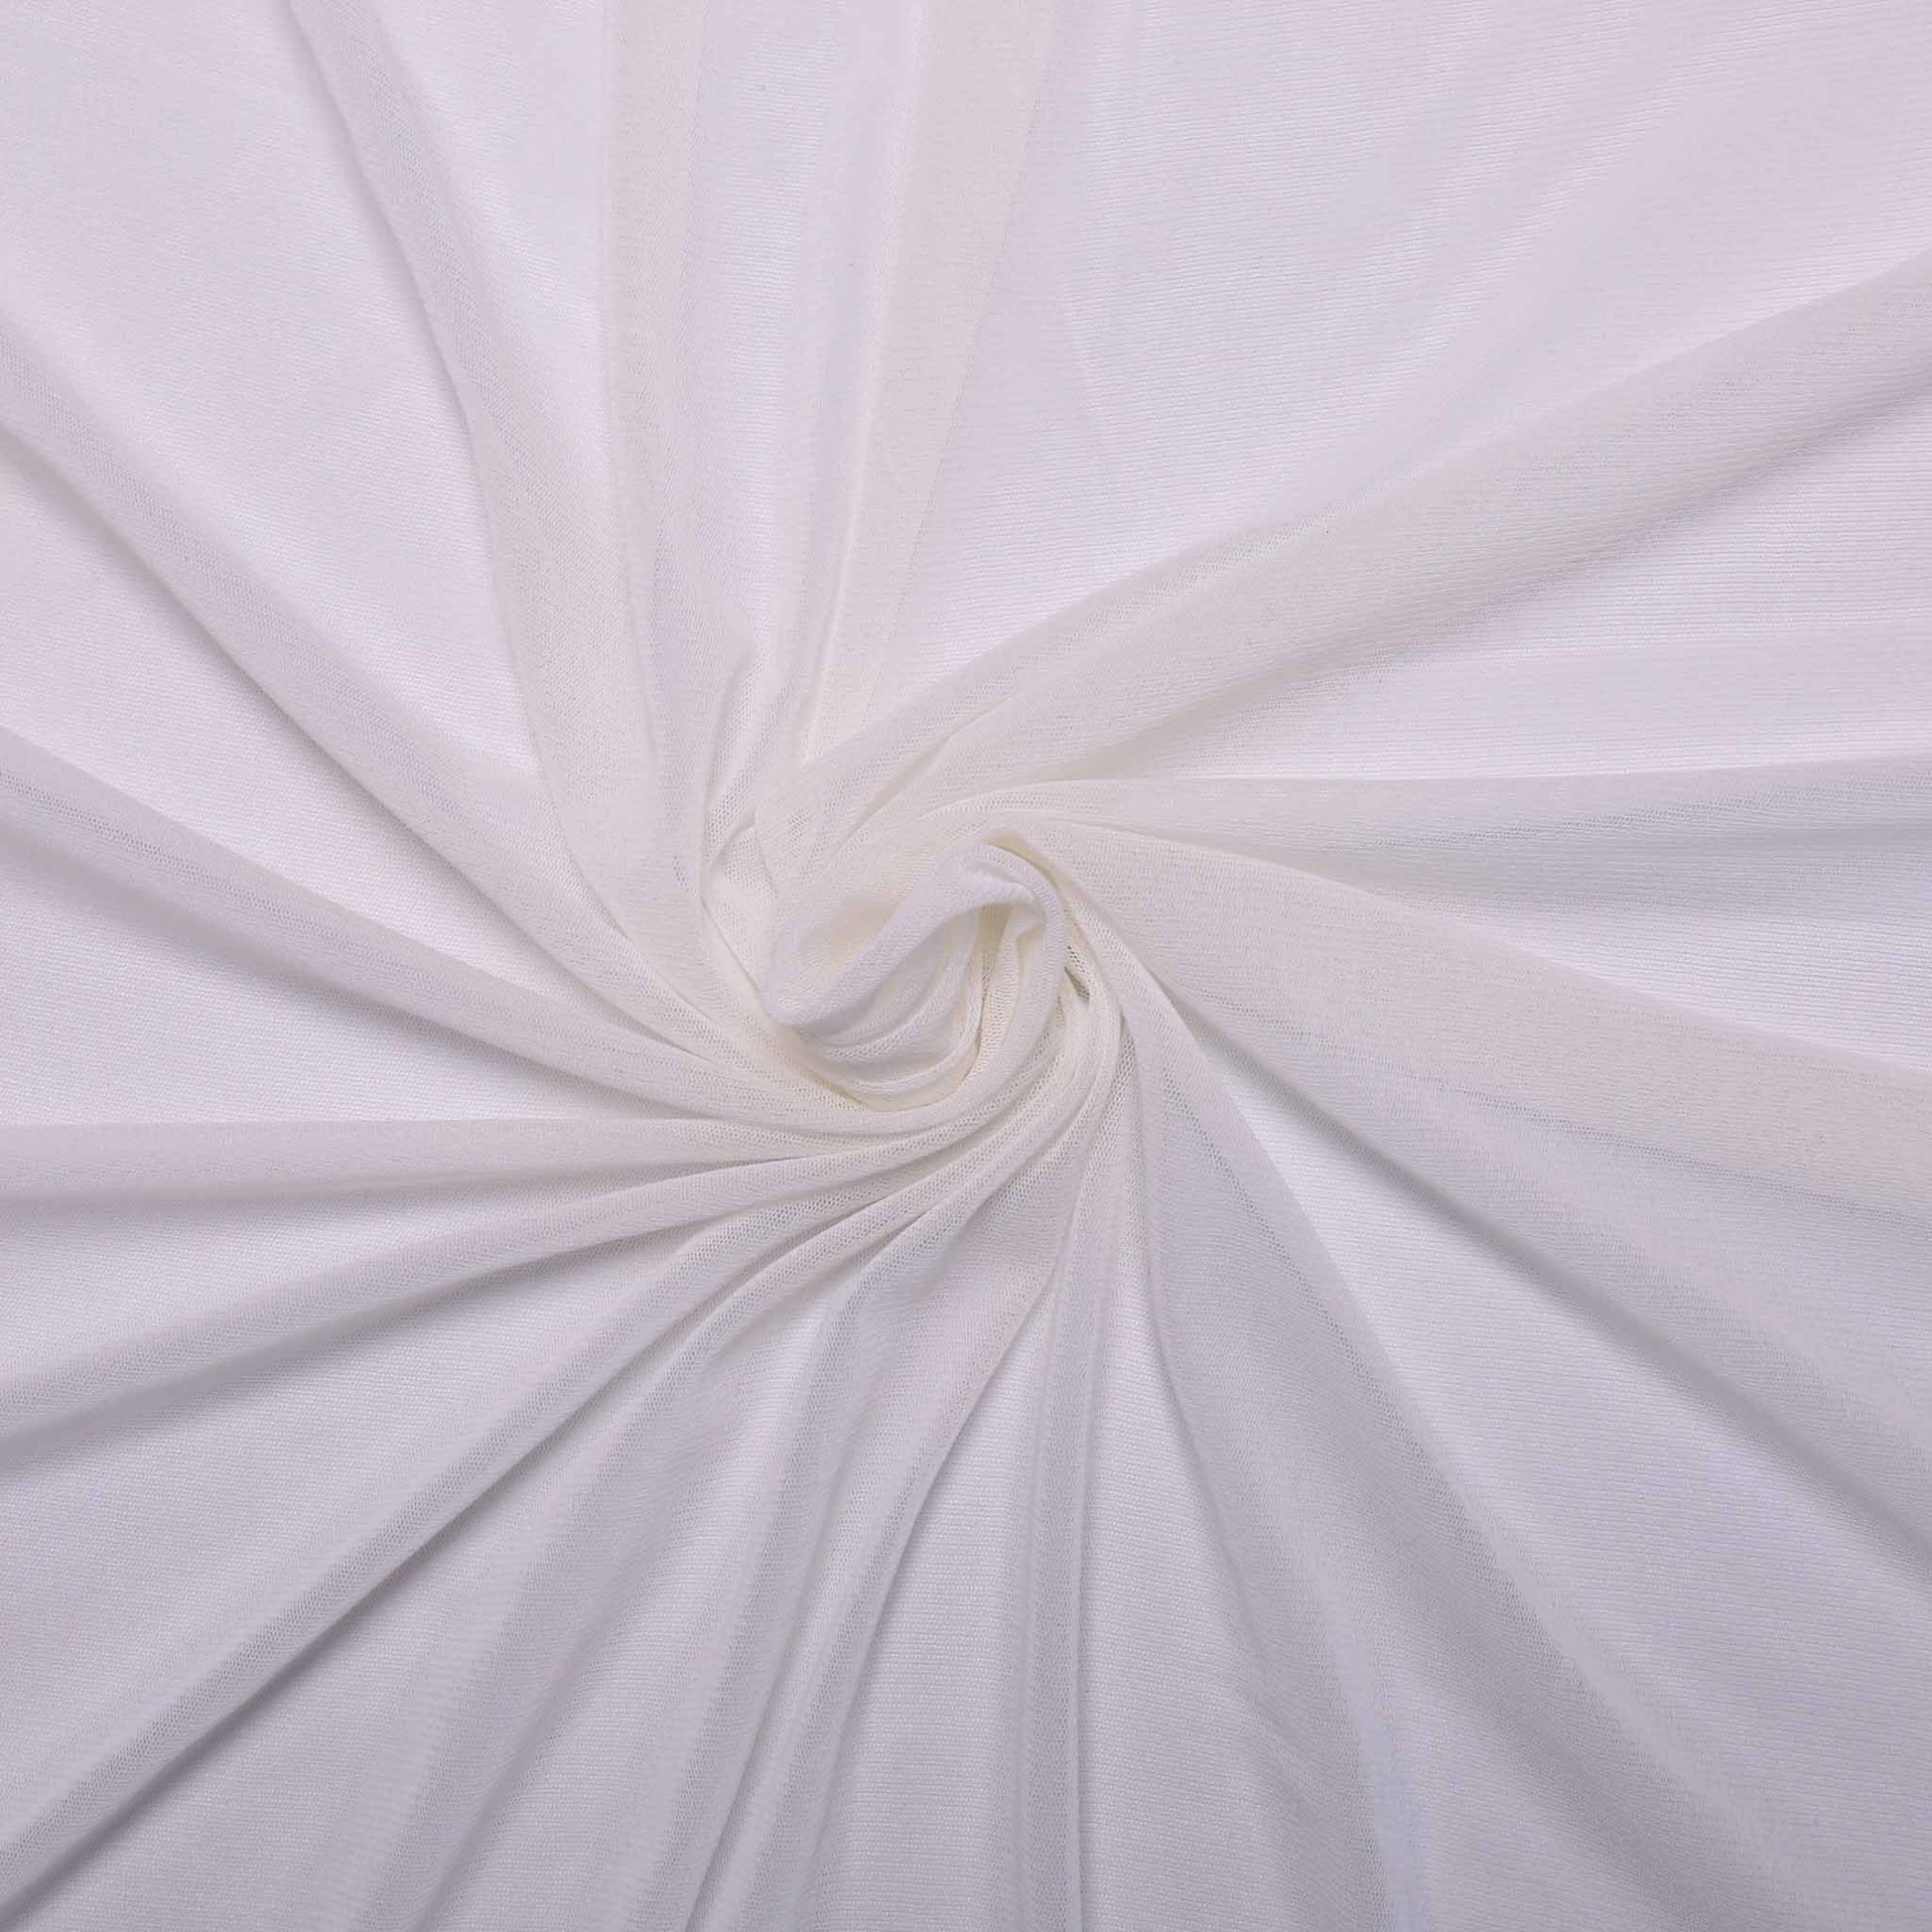 stretchy white netting dressmaking fabric